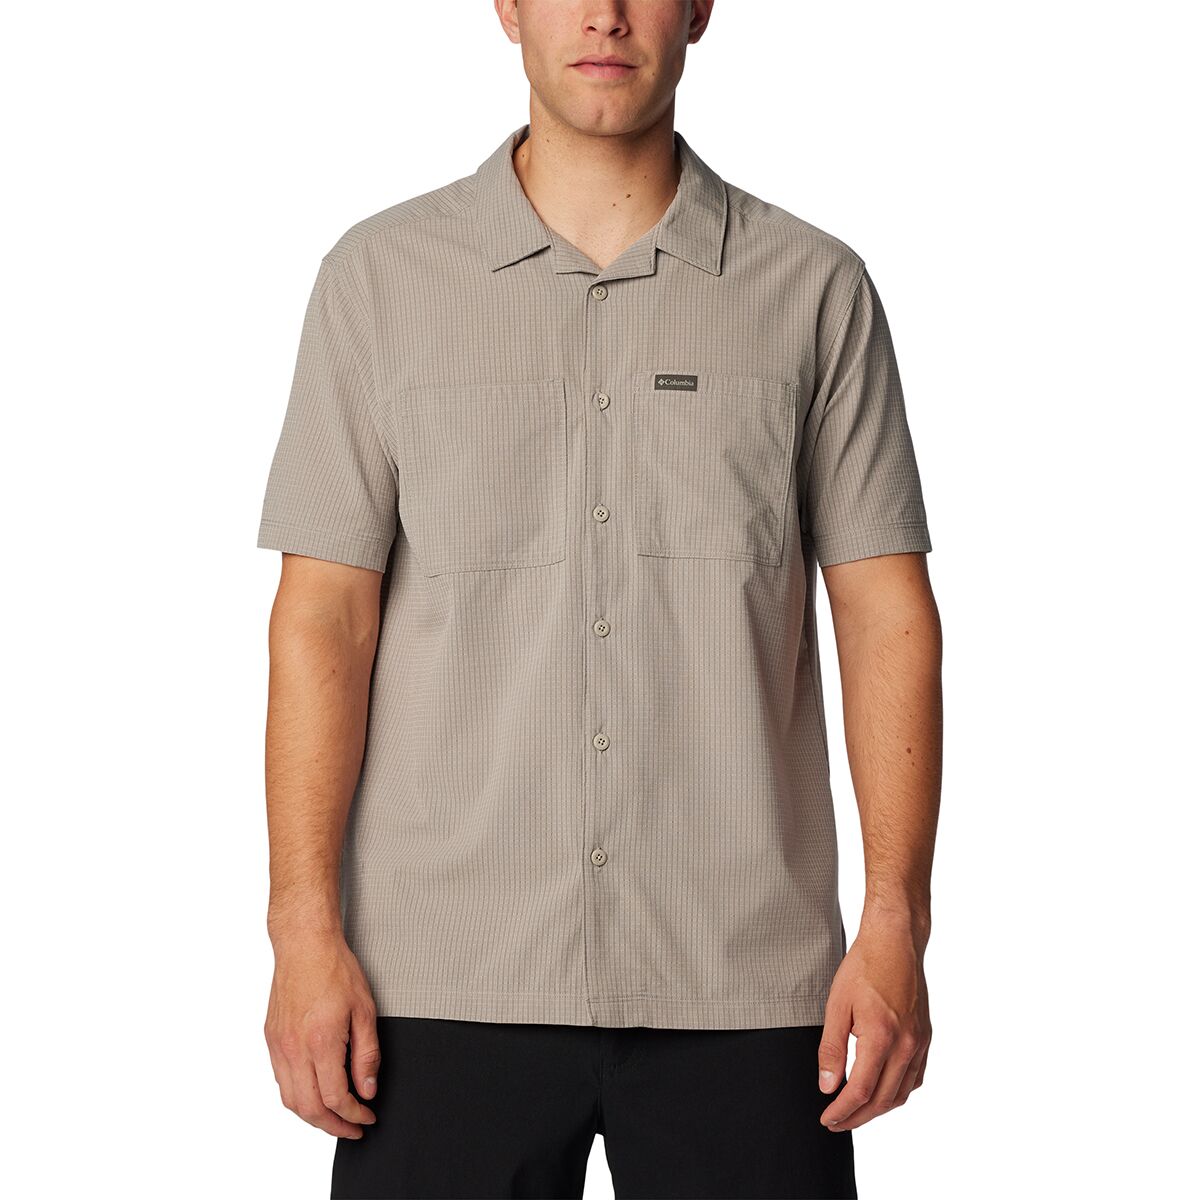 Black Mesa LW Short-Sleeve Shirt - Men